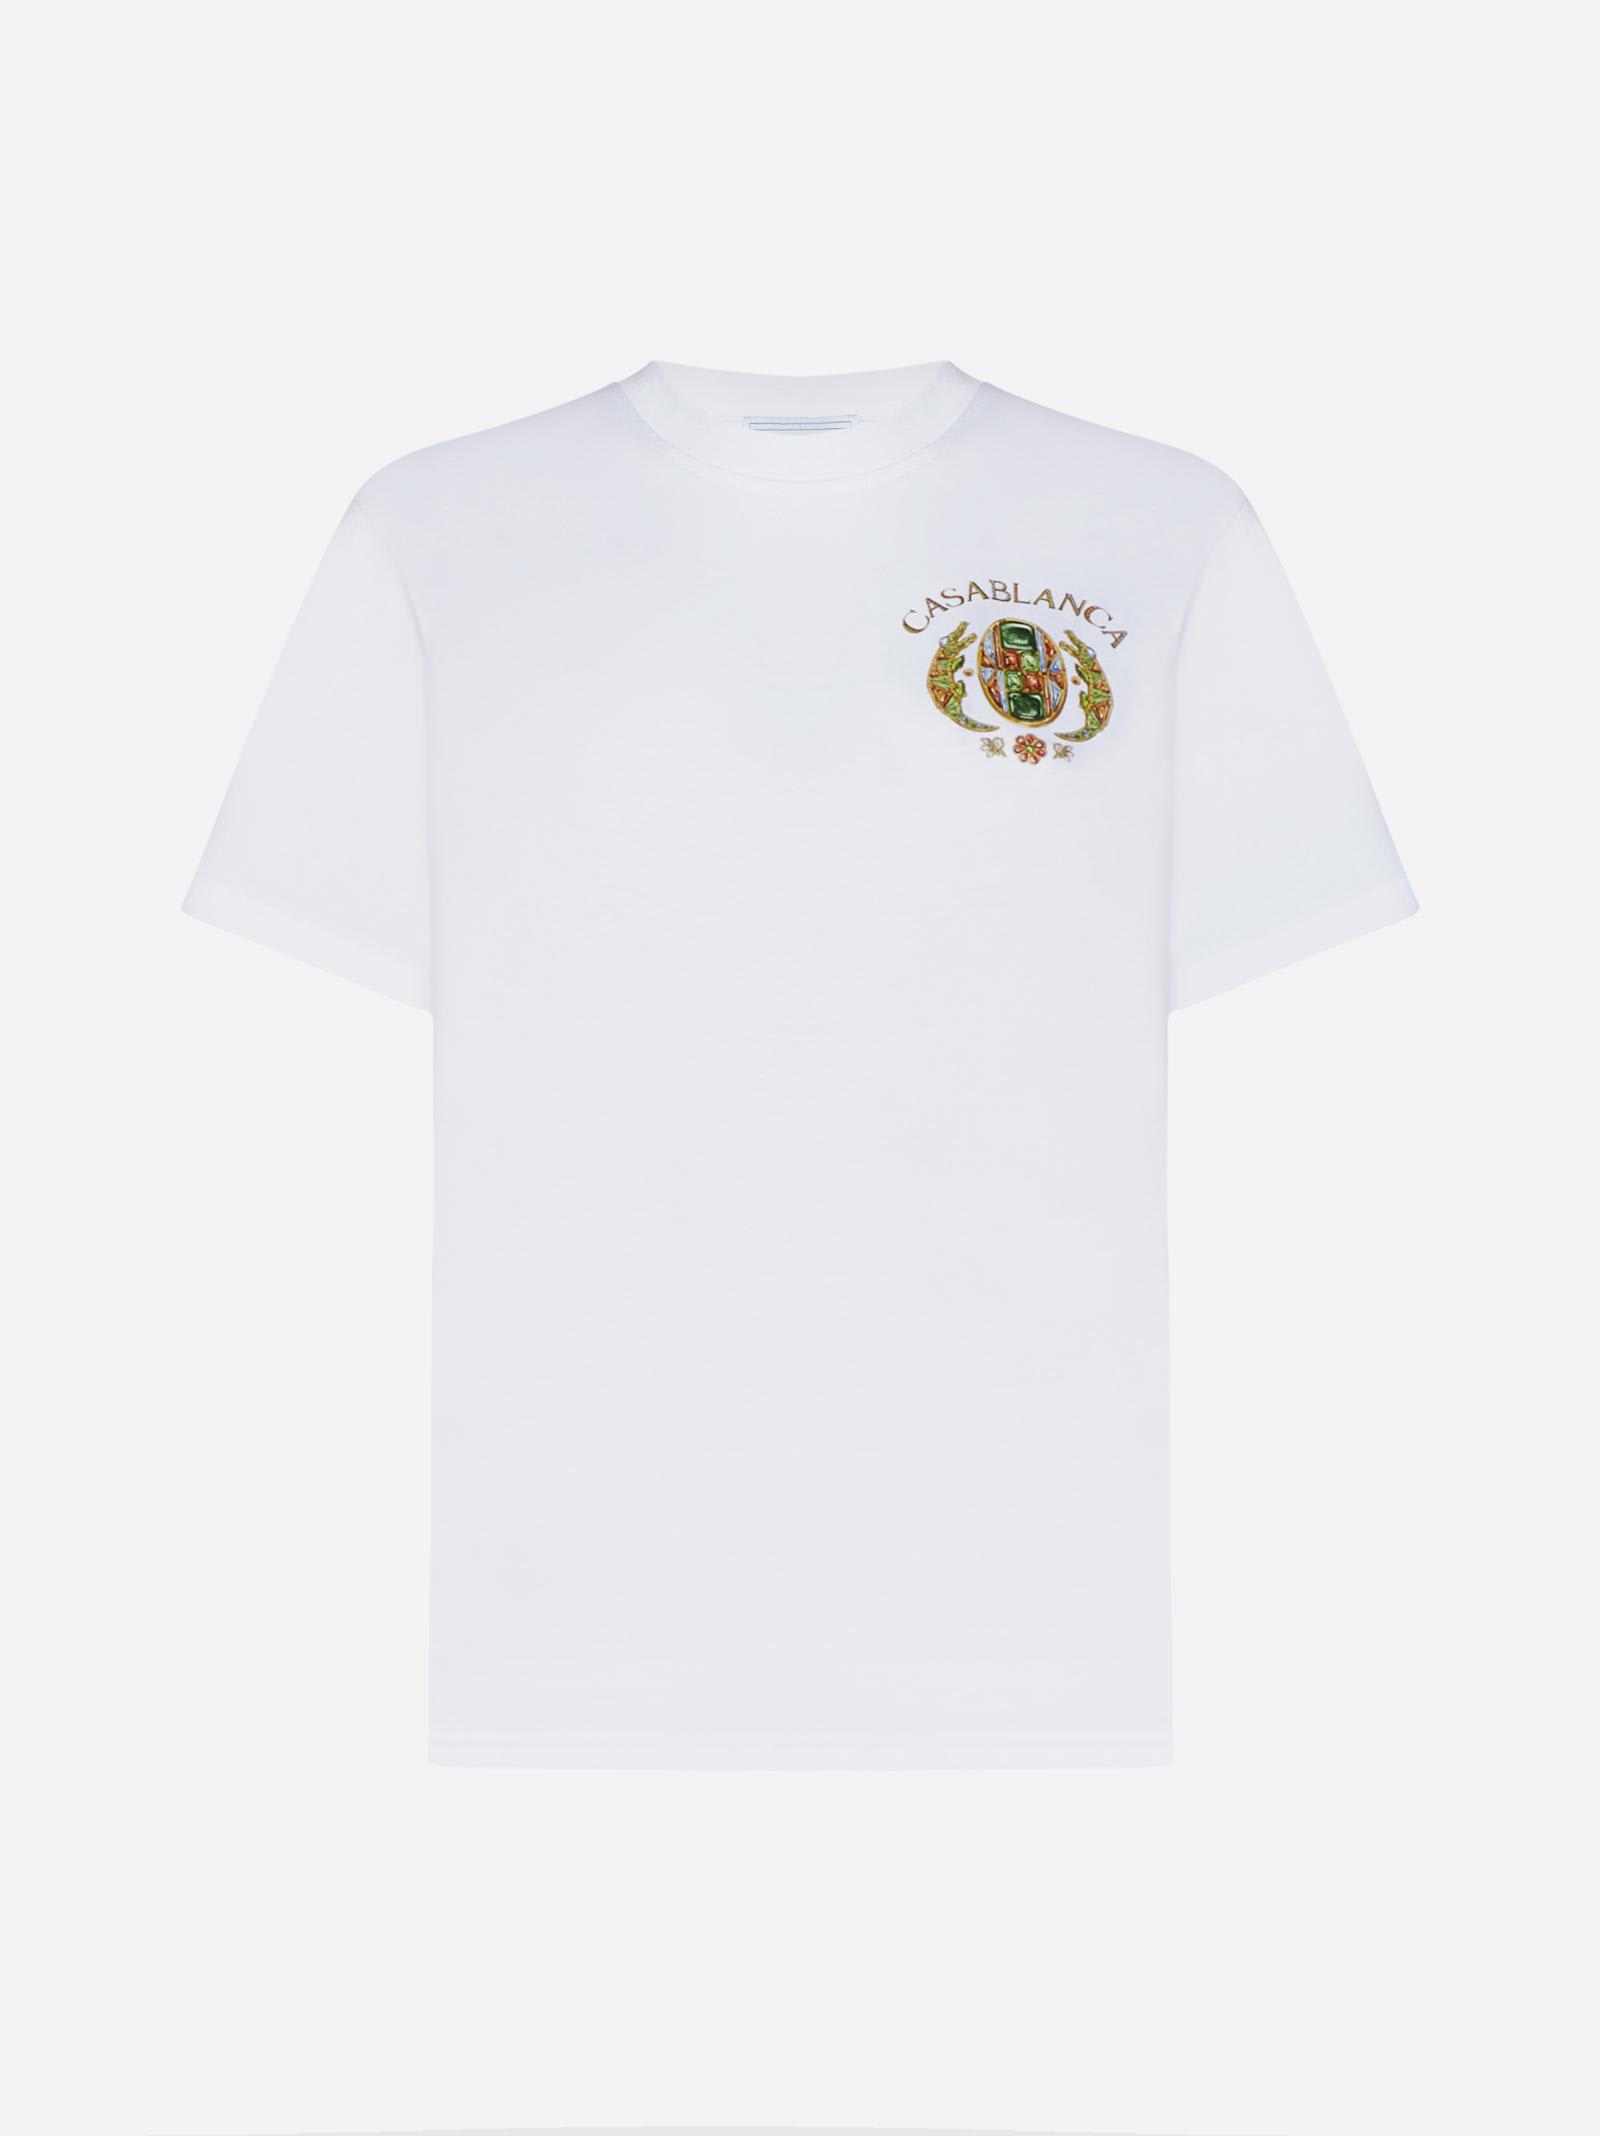 Casablanca Joyaux Dafrique Tennis Club Cotton T-shirt In Bianco